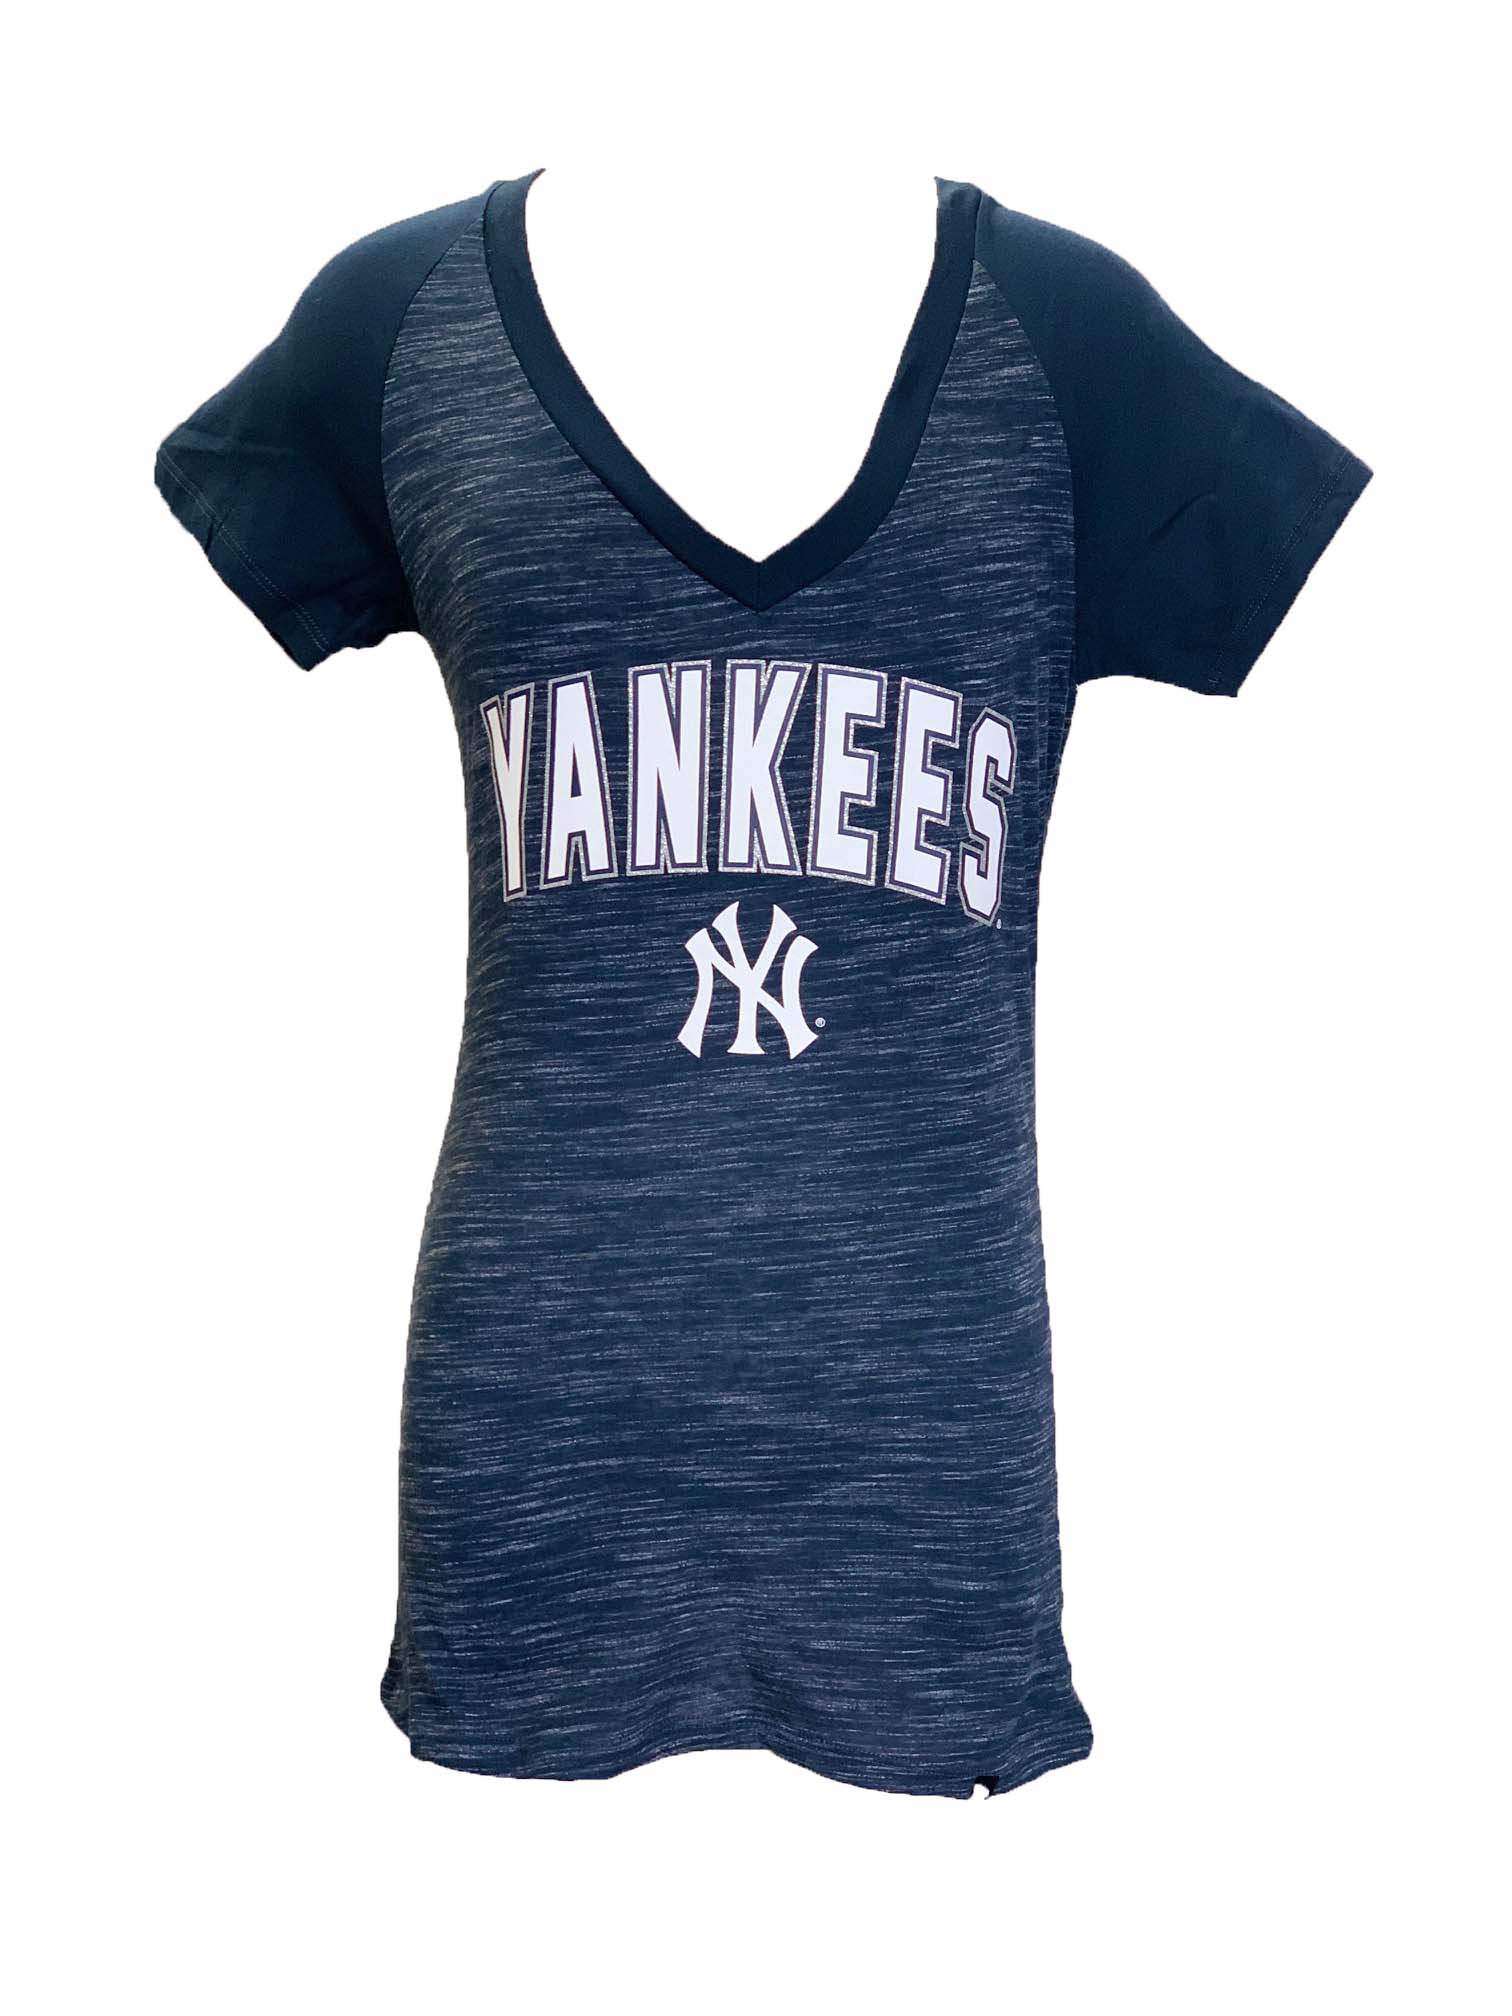 New York Yankees Ladies T-Shirt, Ladies Yankees Shirts, Yankees